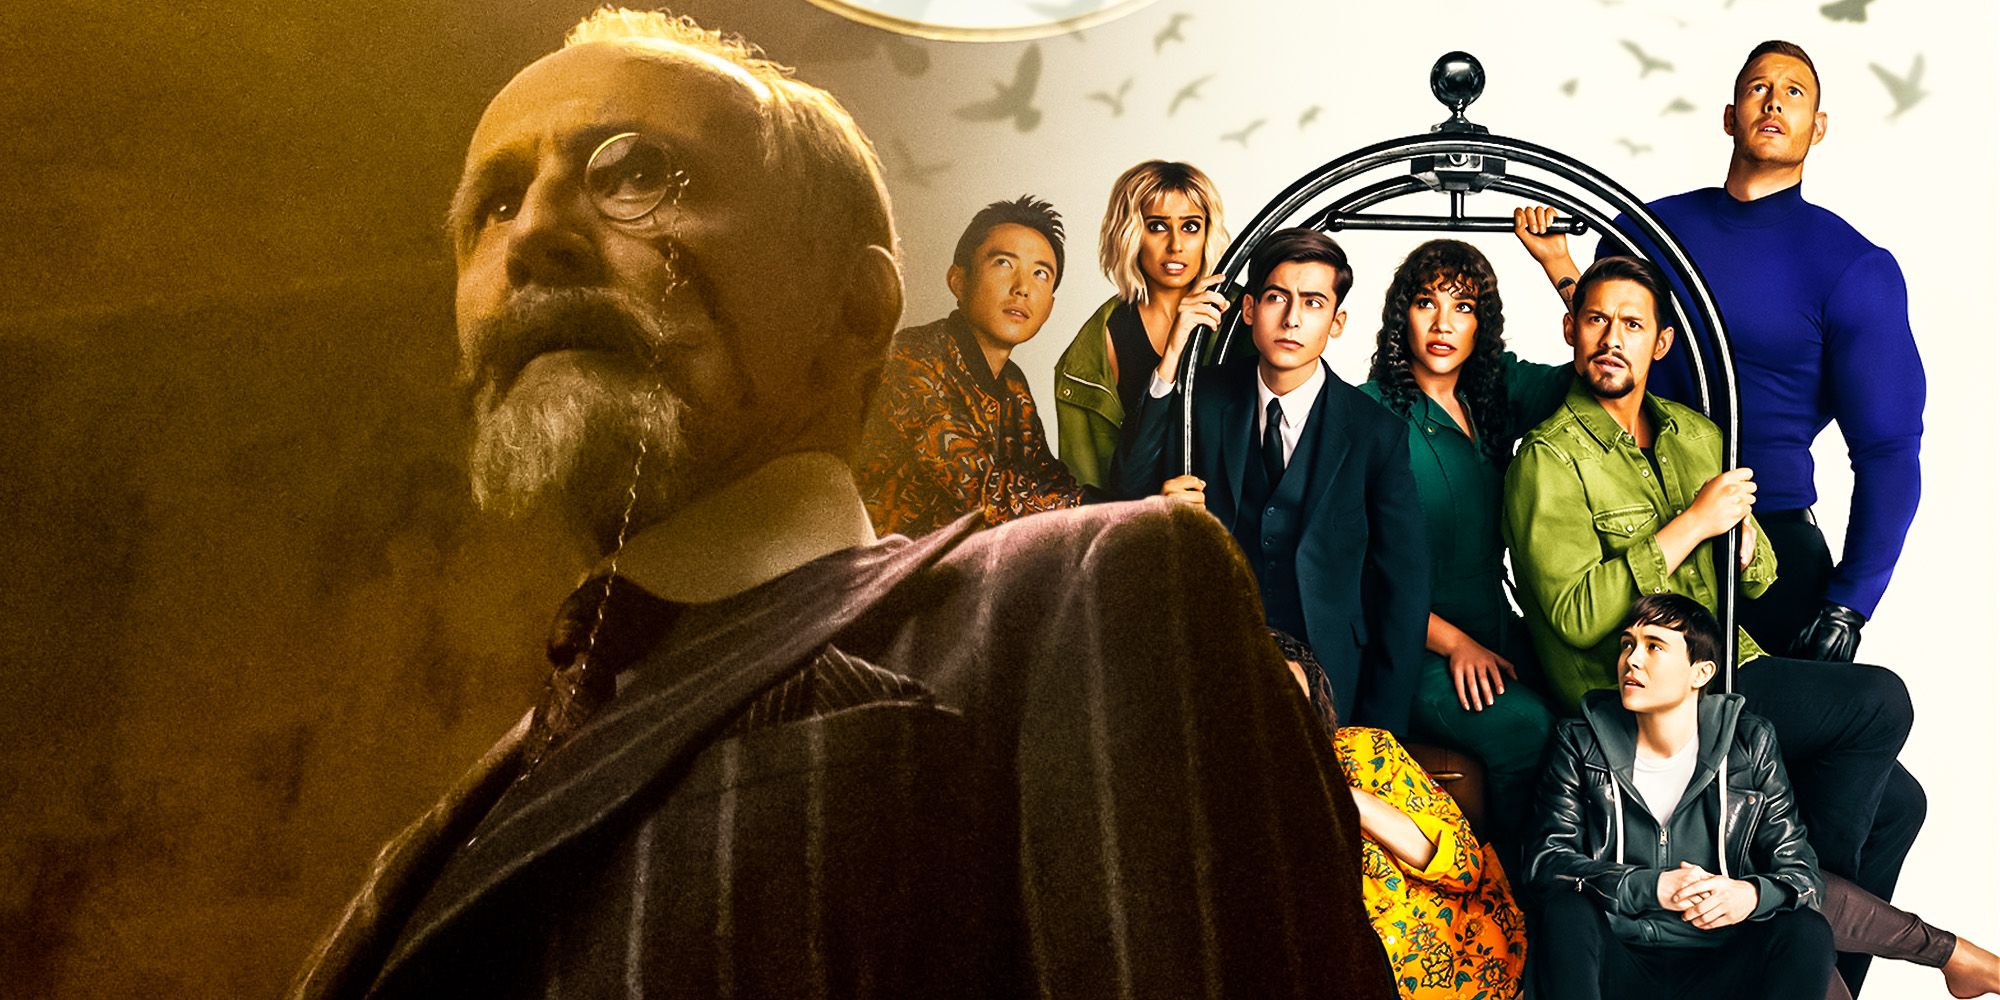 Why Reginald Hargreeves Is Alive In Umbrella Academy Season 3